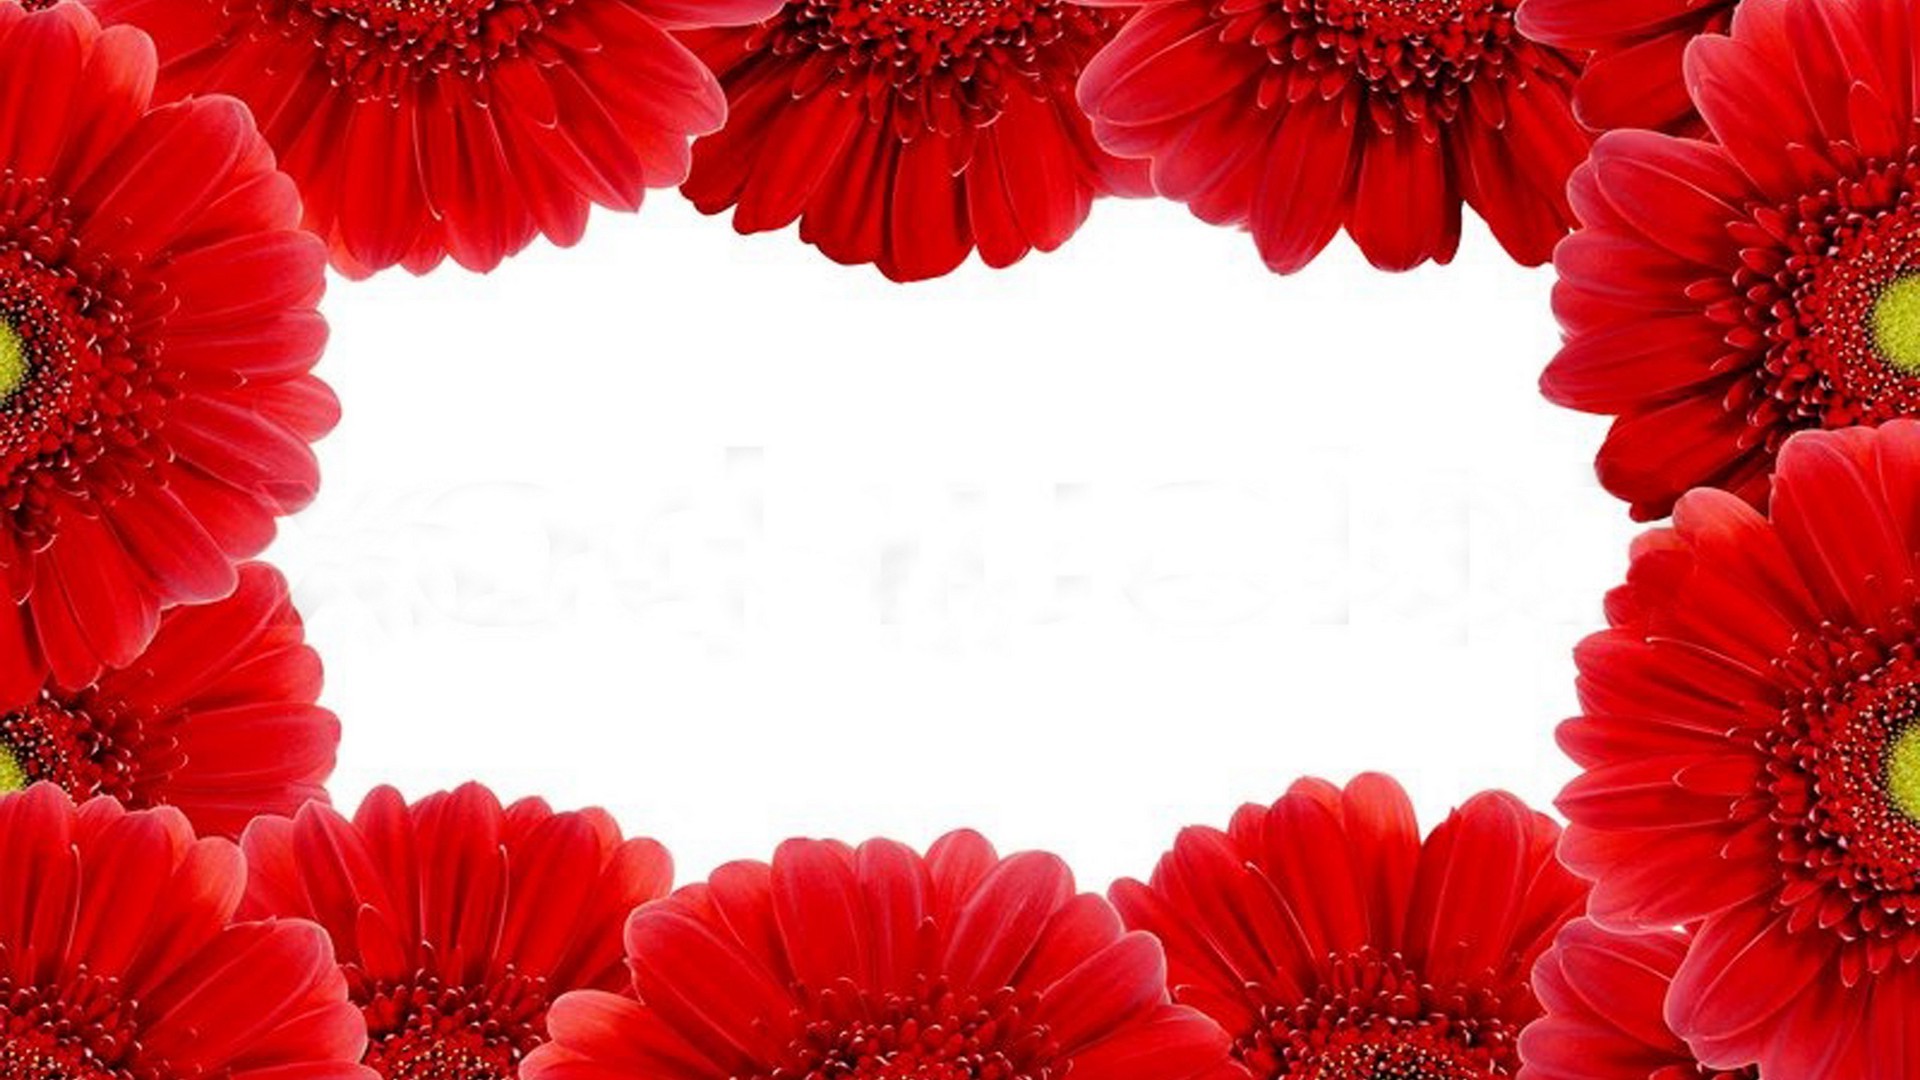 Red Gerbera Flower - Free Cool Hd Wallpaper For Desktop - Wallpaper ...